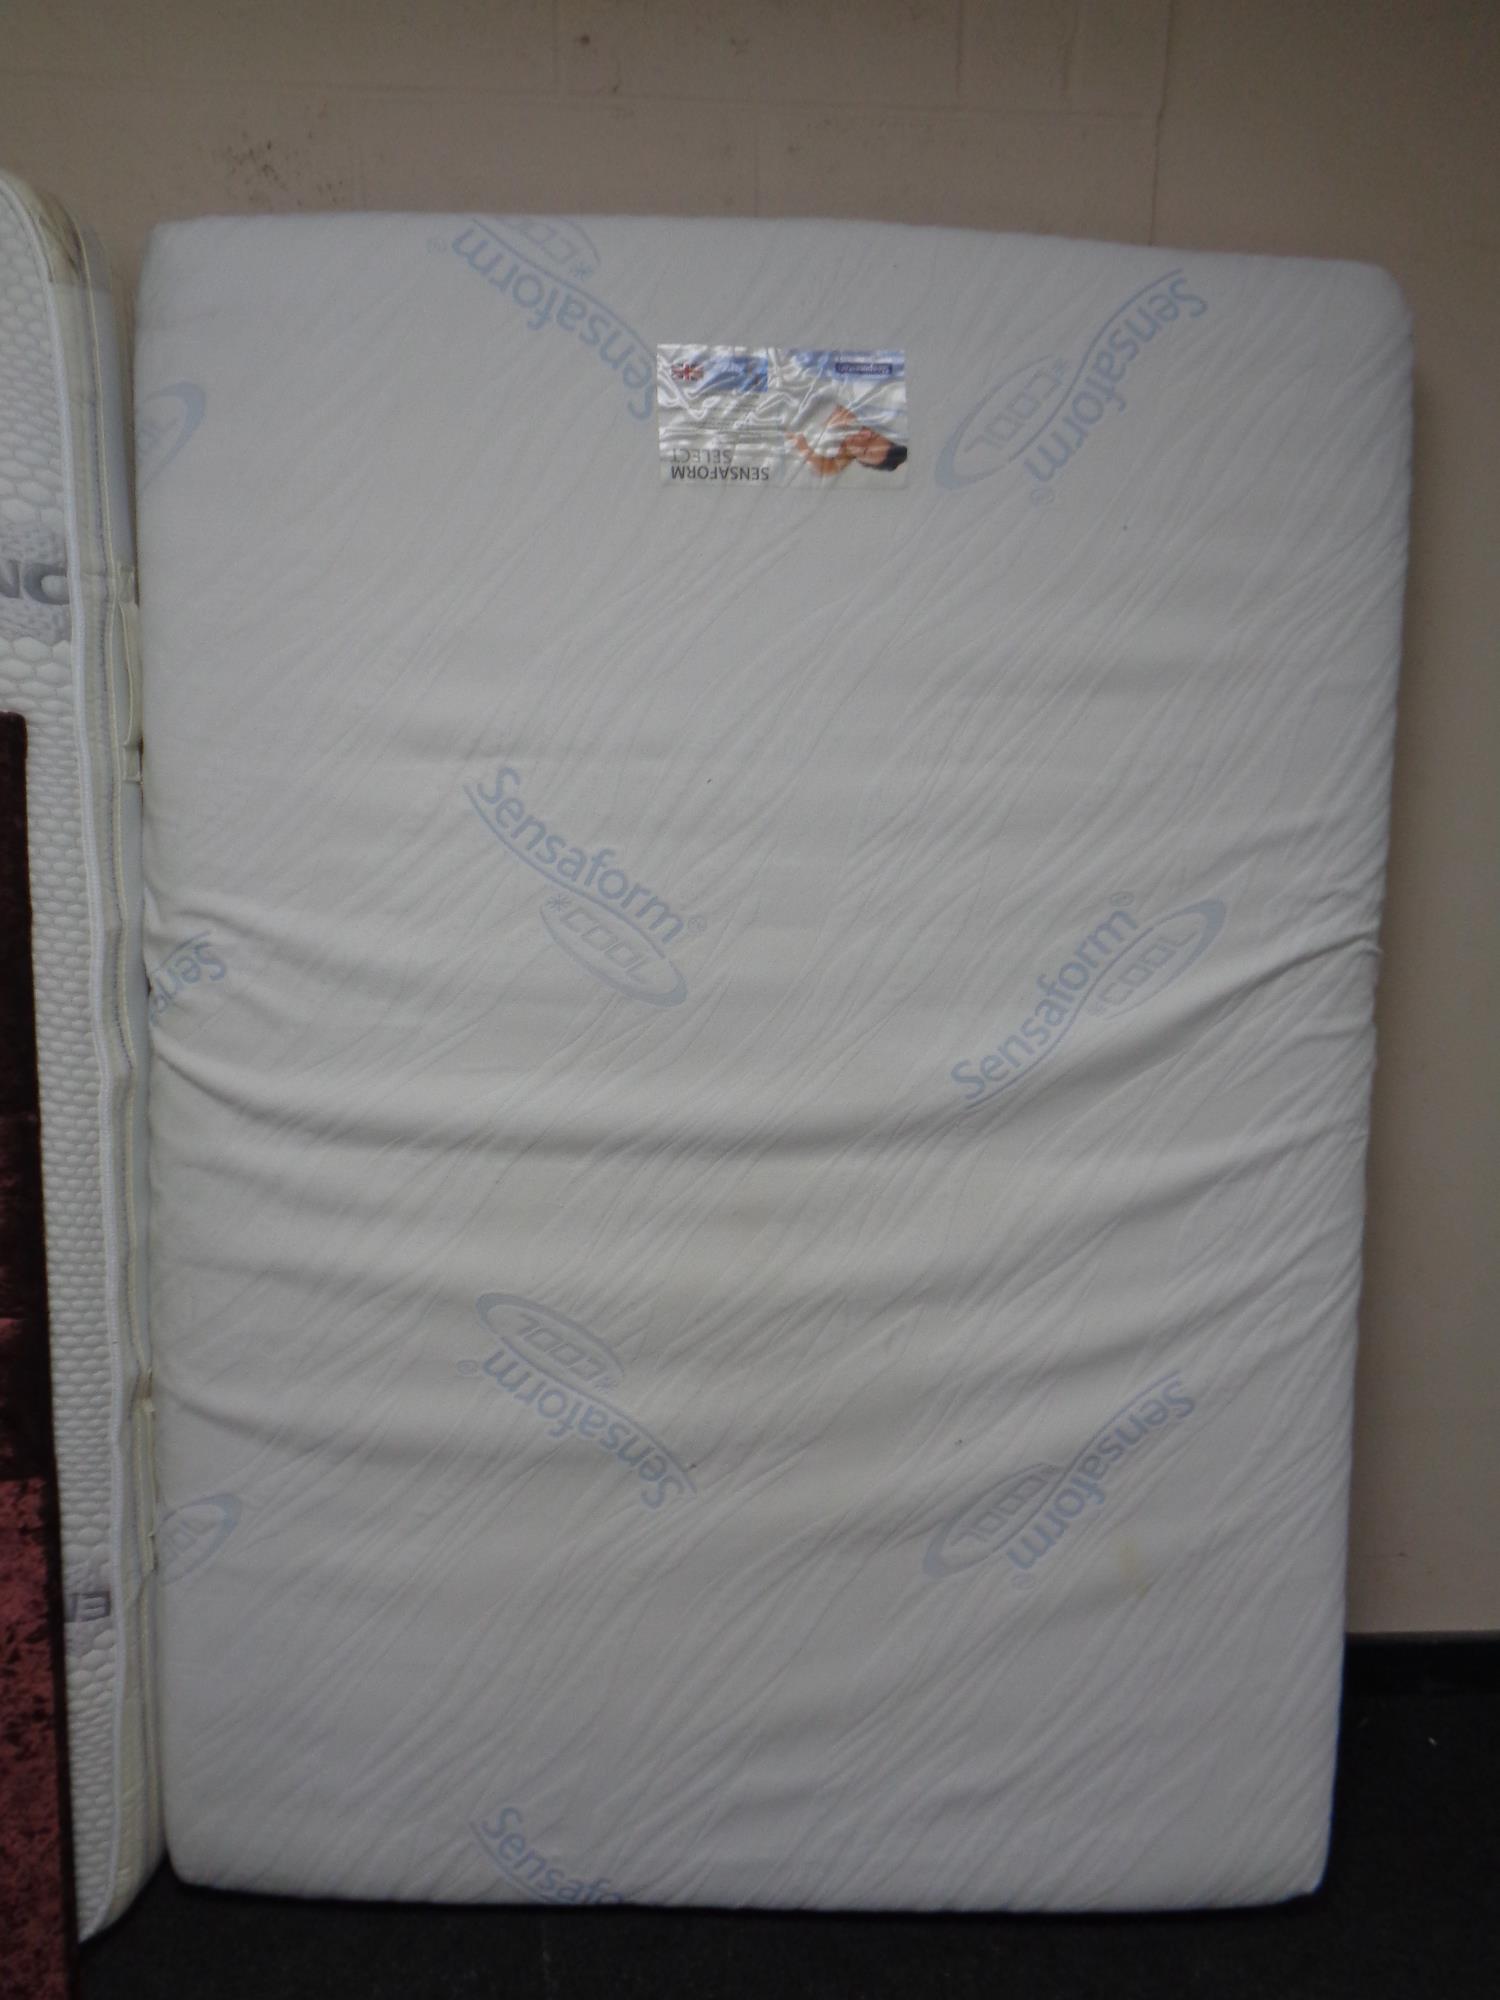 A Healthopedic Tencel 4ft 6' mattress